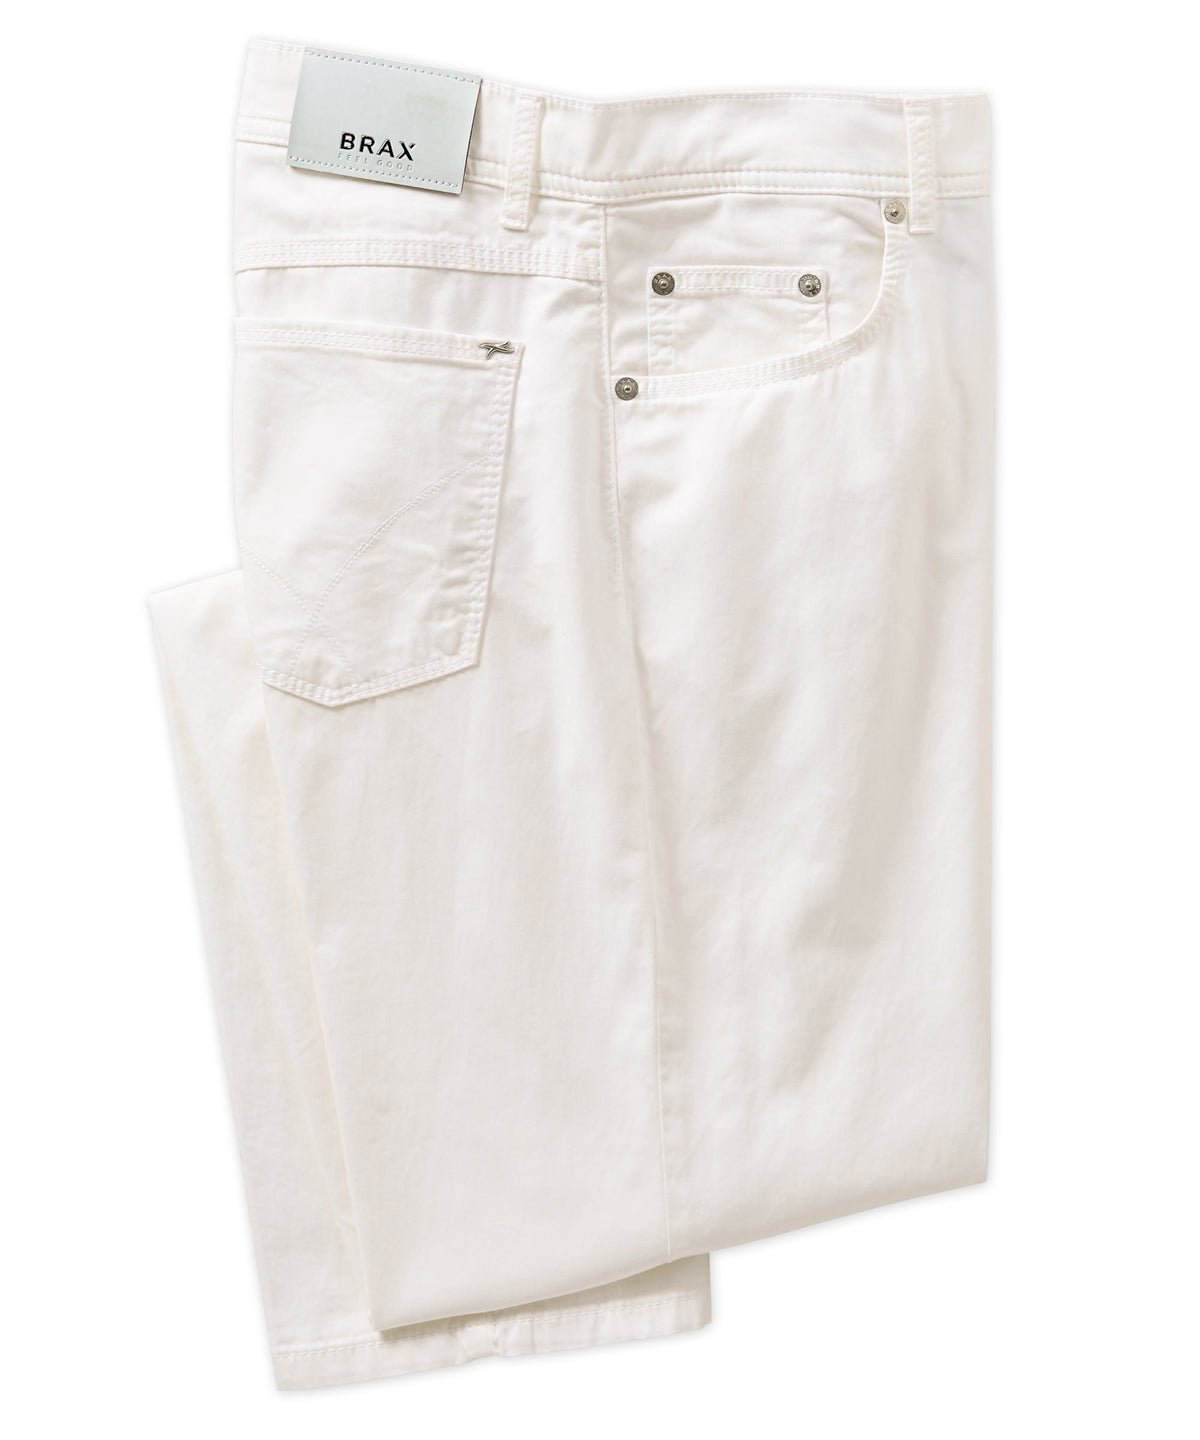 Brax Marathon 2.0 Flex 5-Pocket Jean